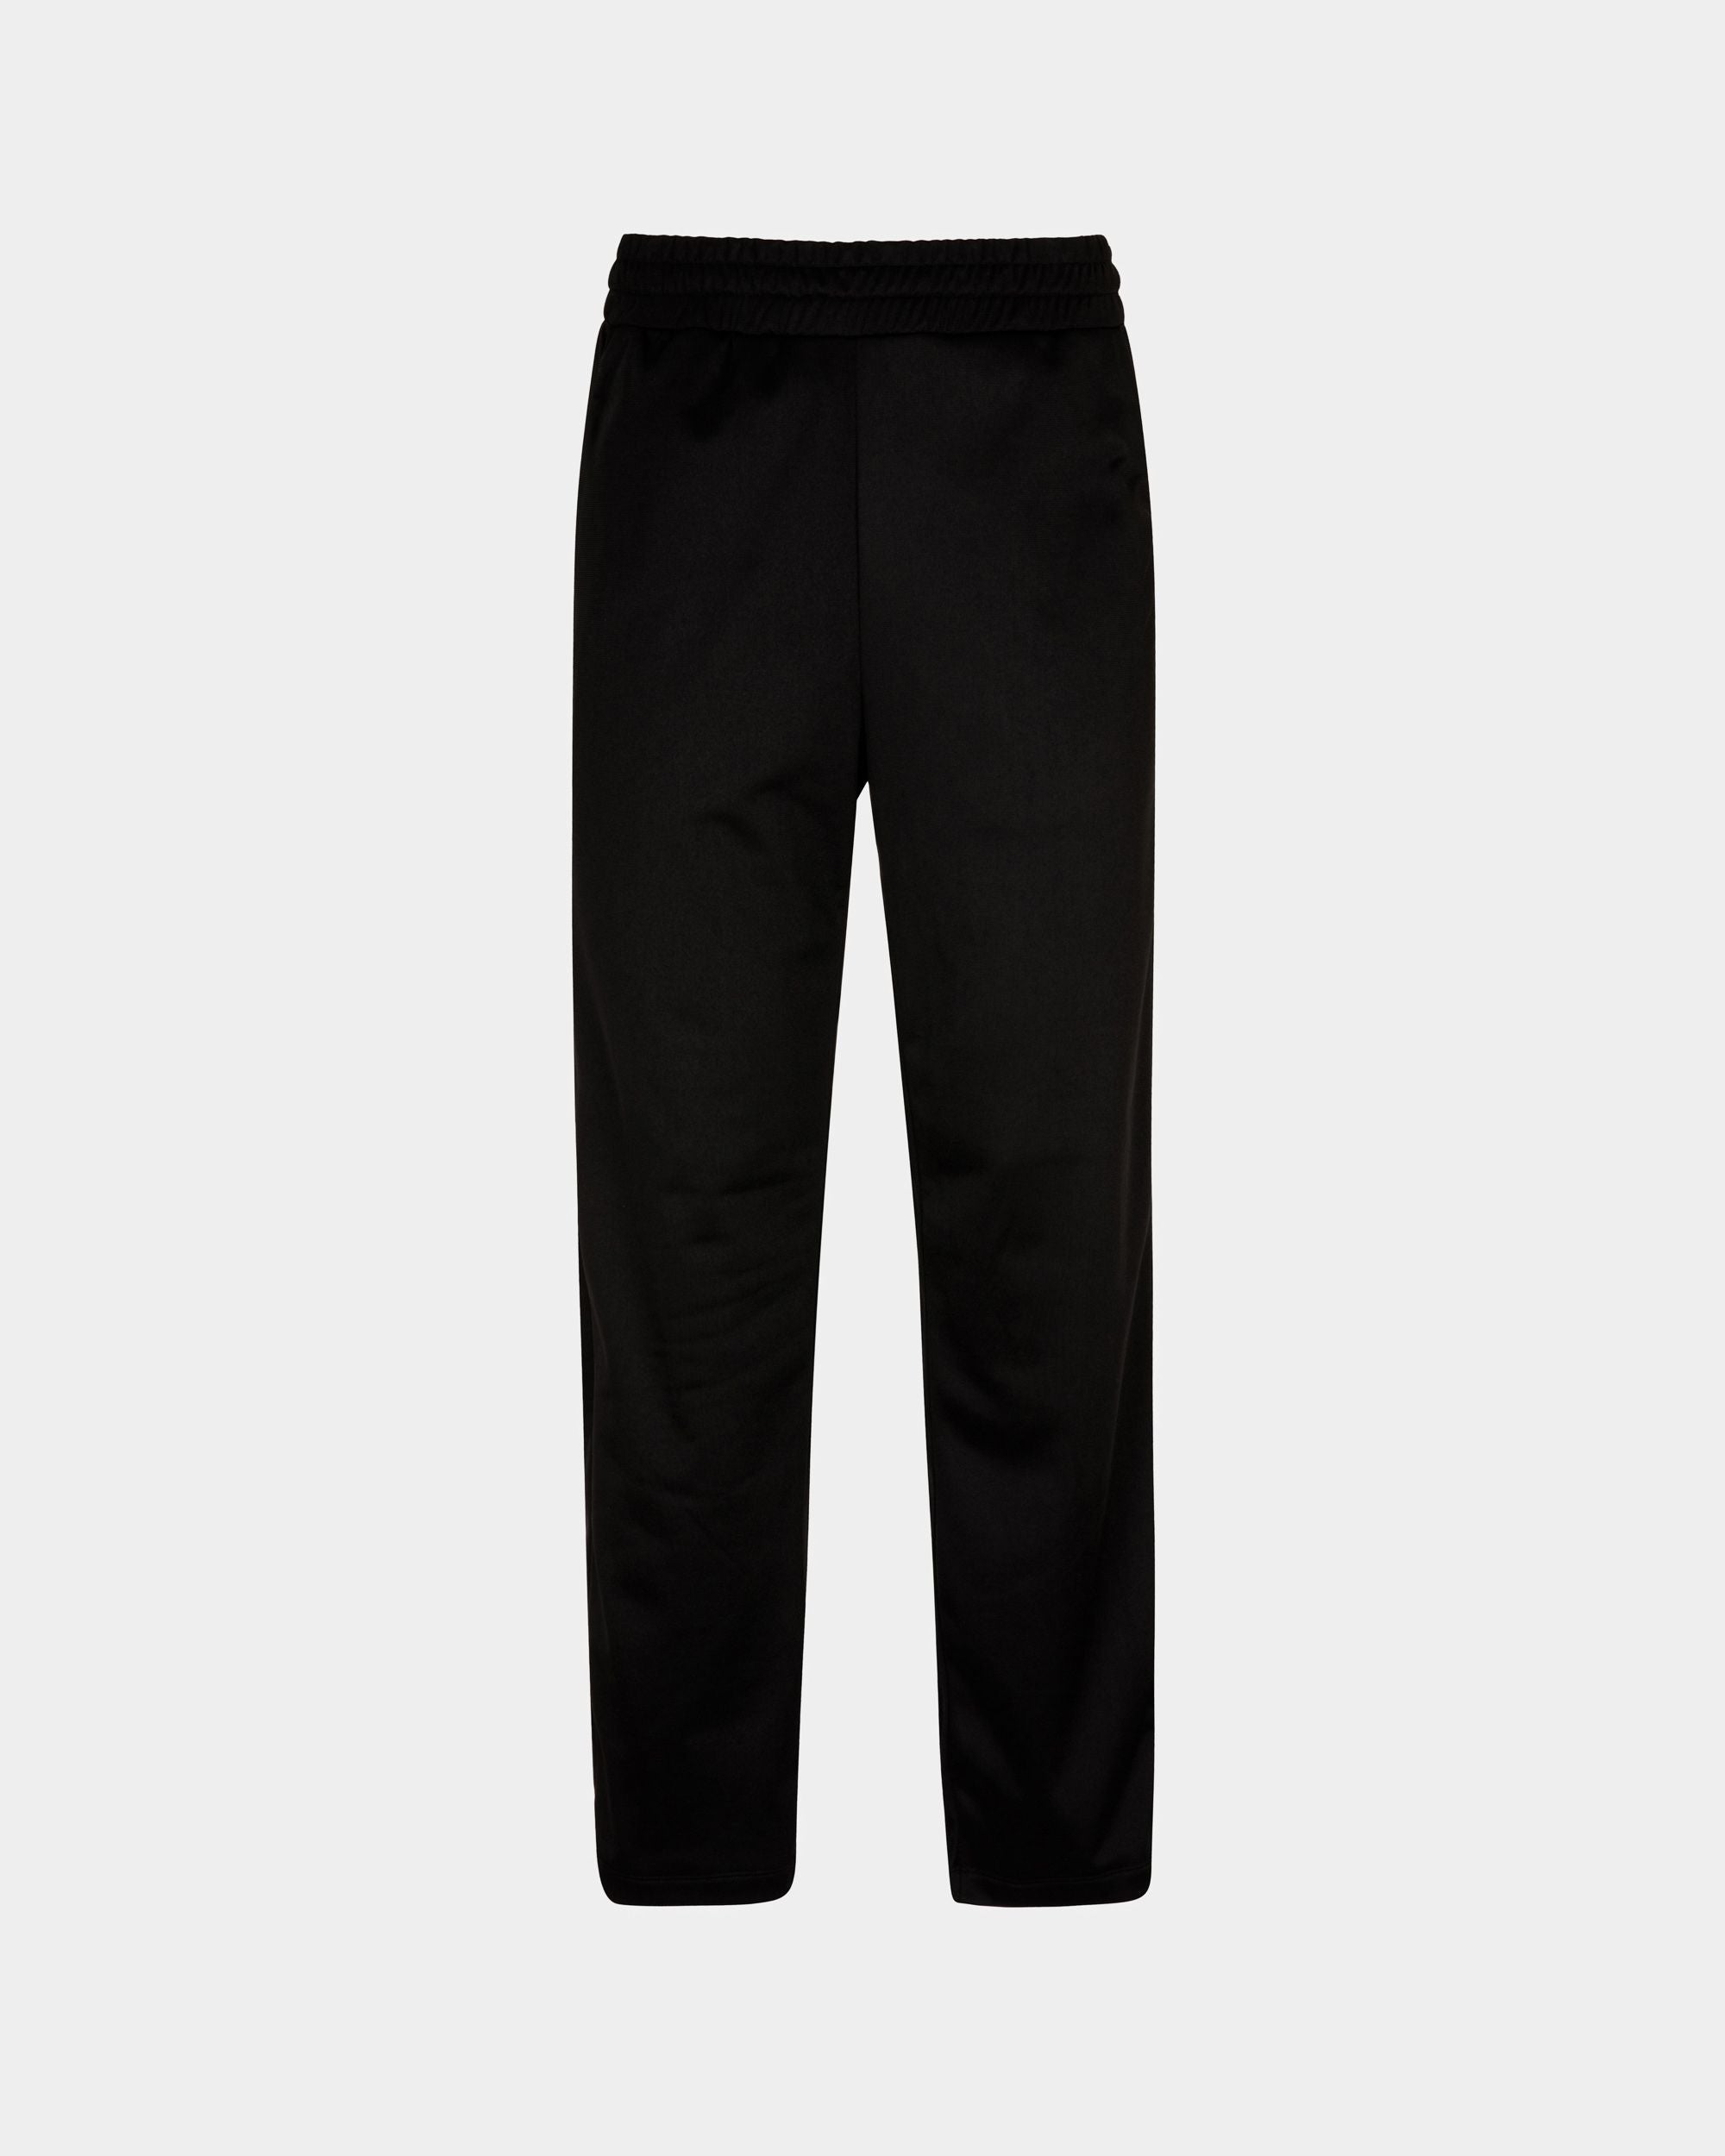 Men's Sweatpants in Black| Bally | Still Life Front